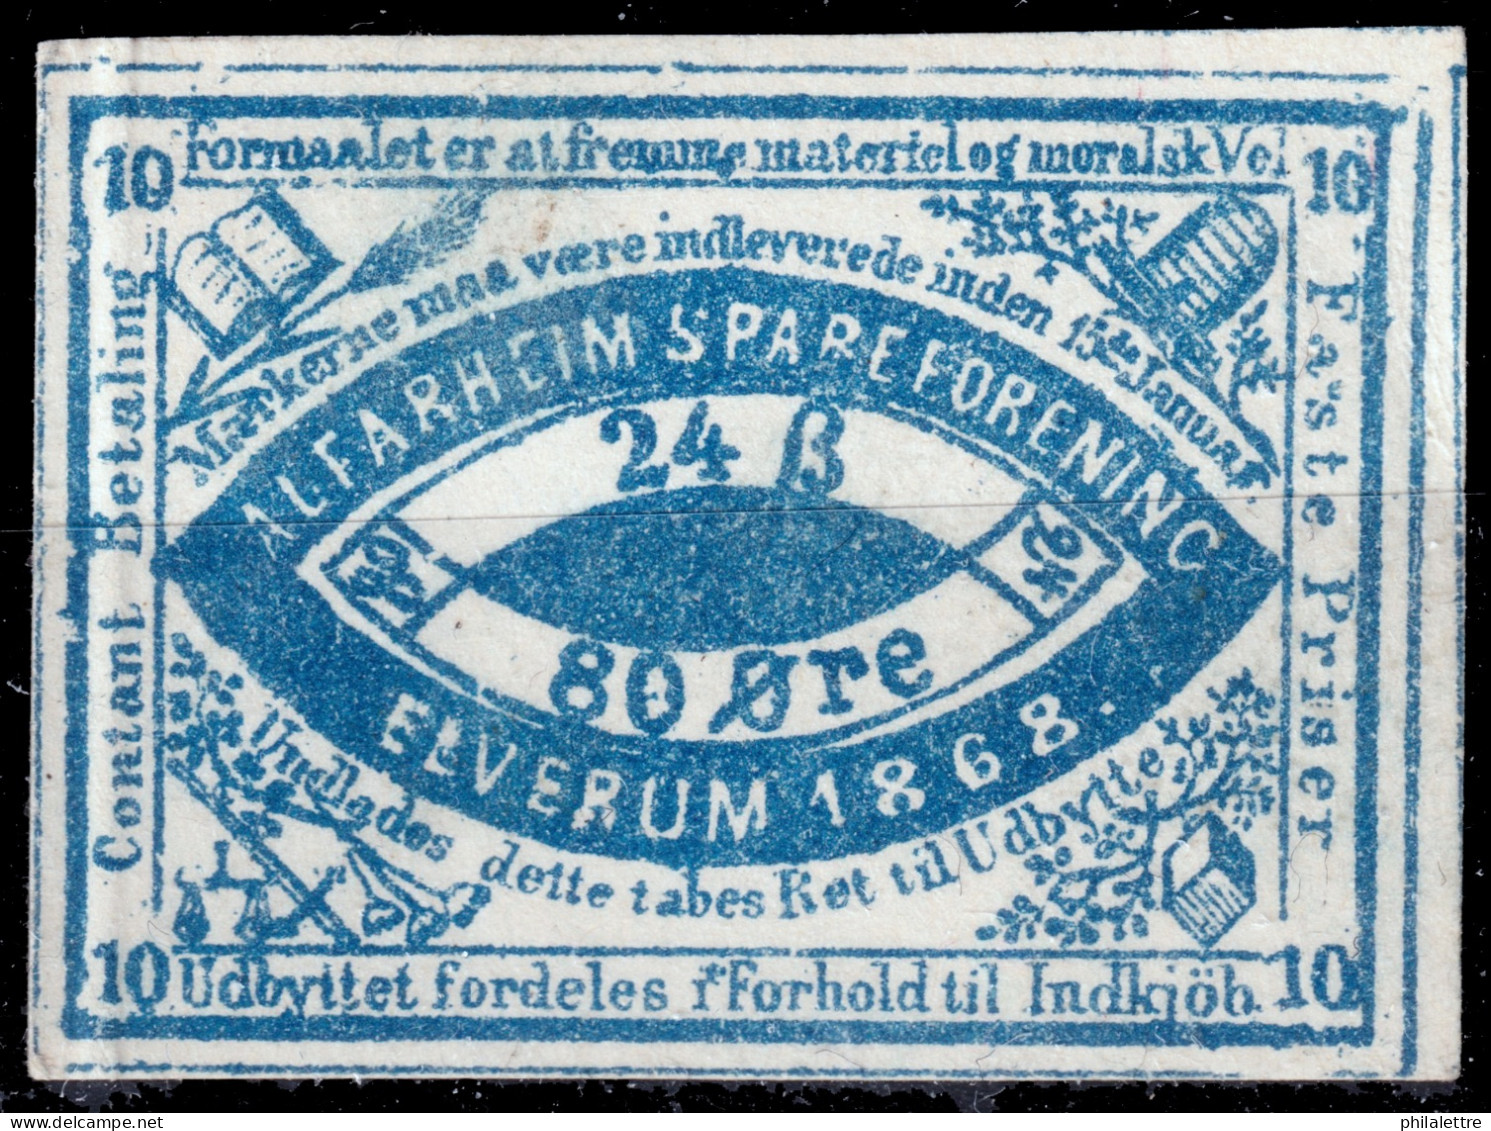 NORVÈGE / NORWAY - Savings Stamp / Label  "ALFARHEIM SPAREFORENING" 80 øre Blue - On Card, No Gum - Steuermarken